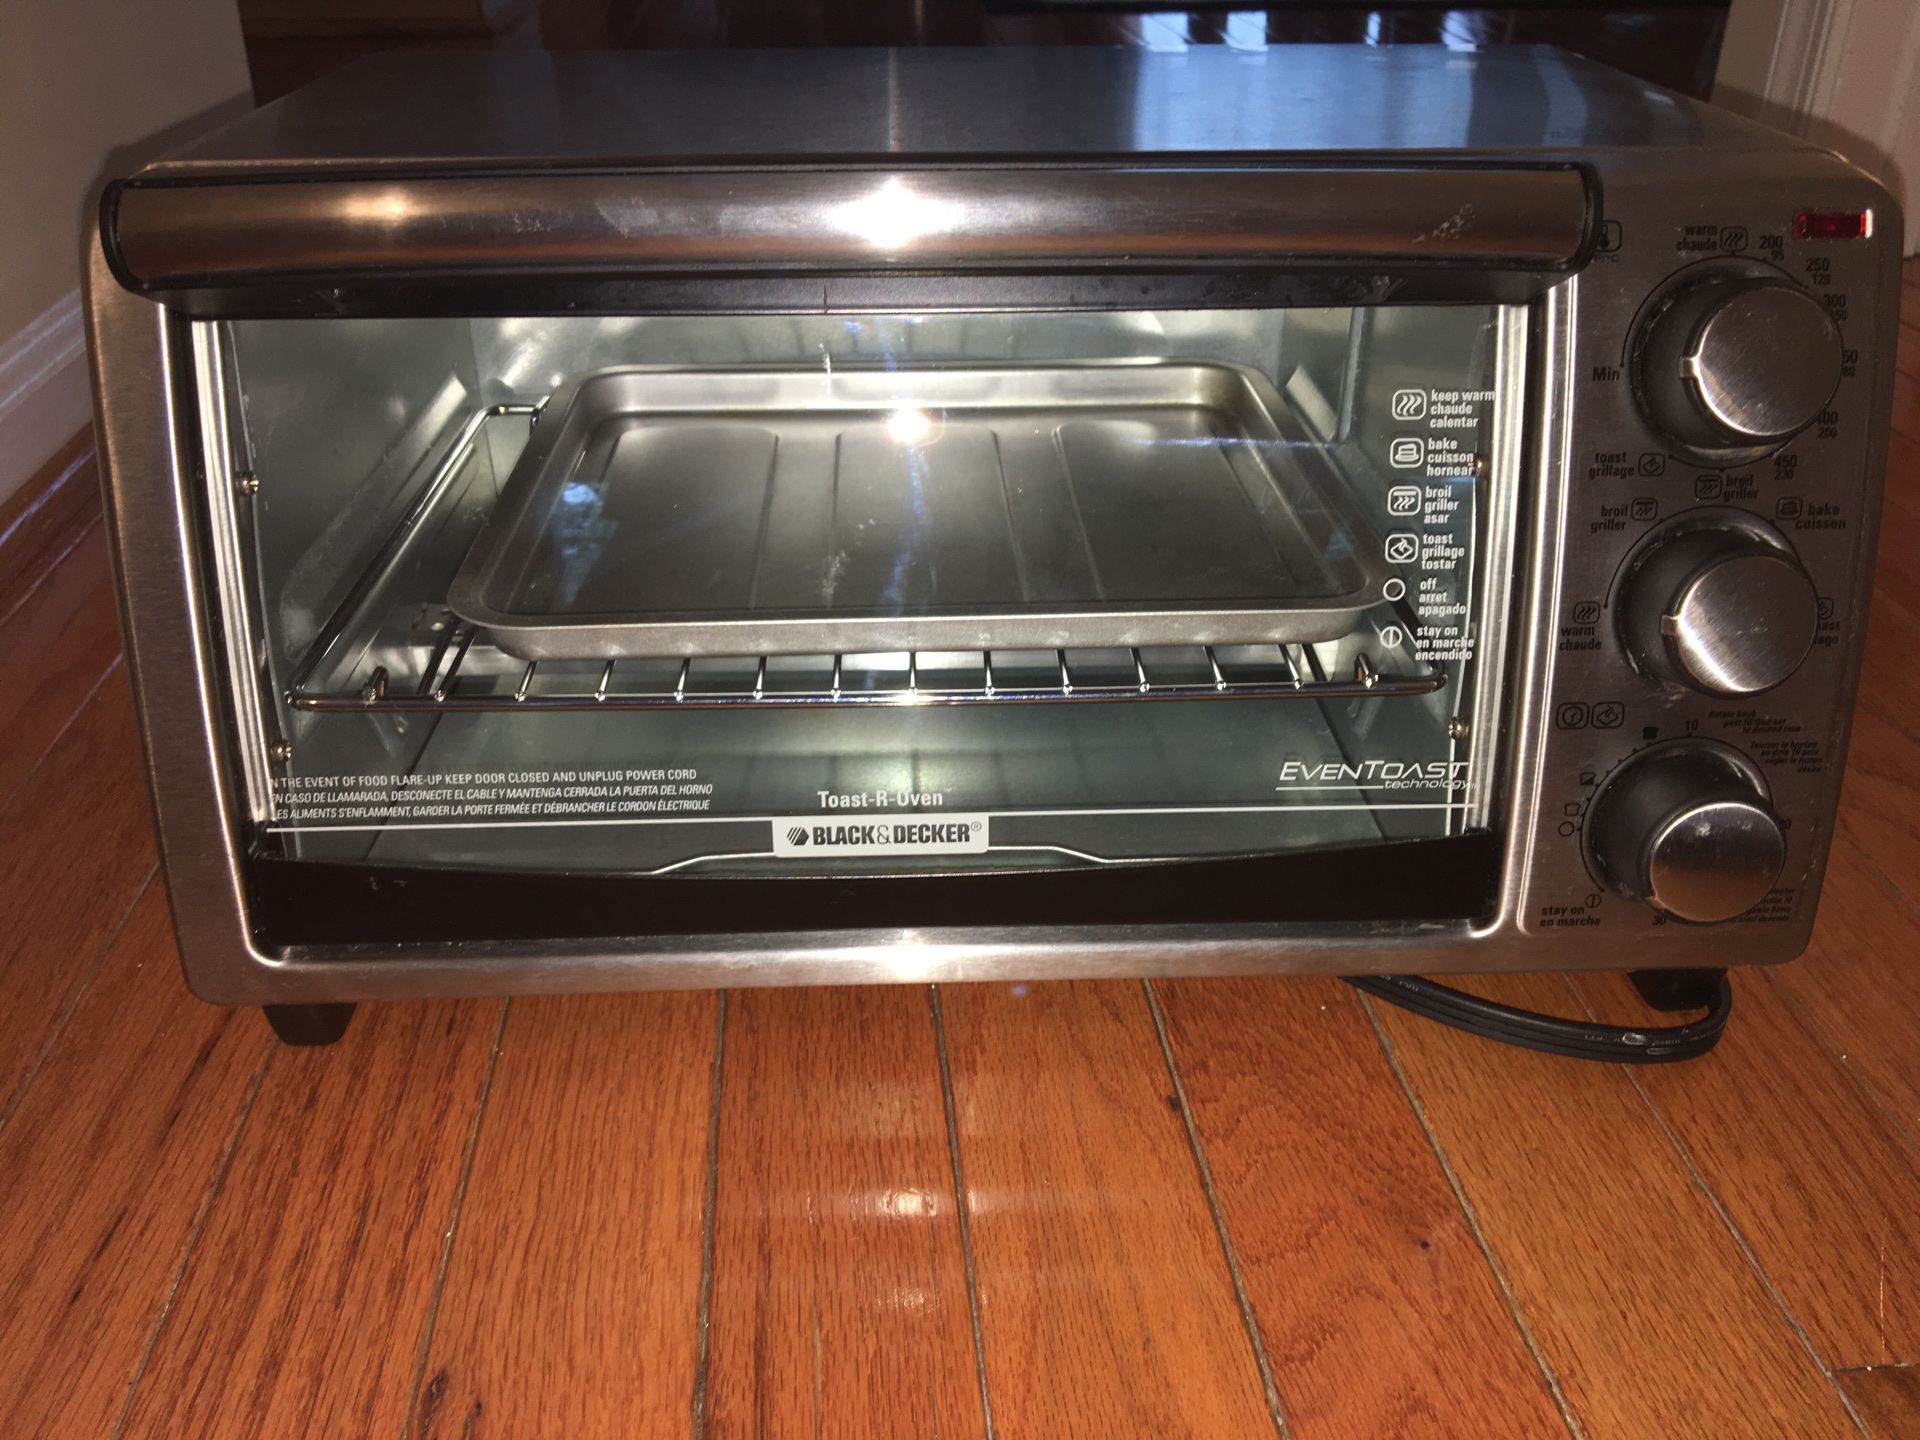 Toast R oven-Black&Decker